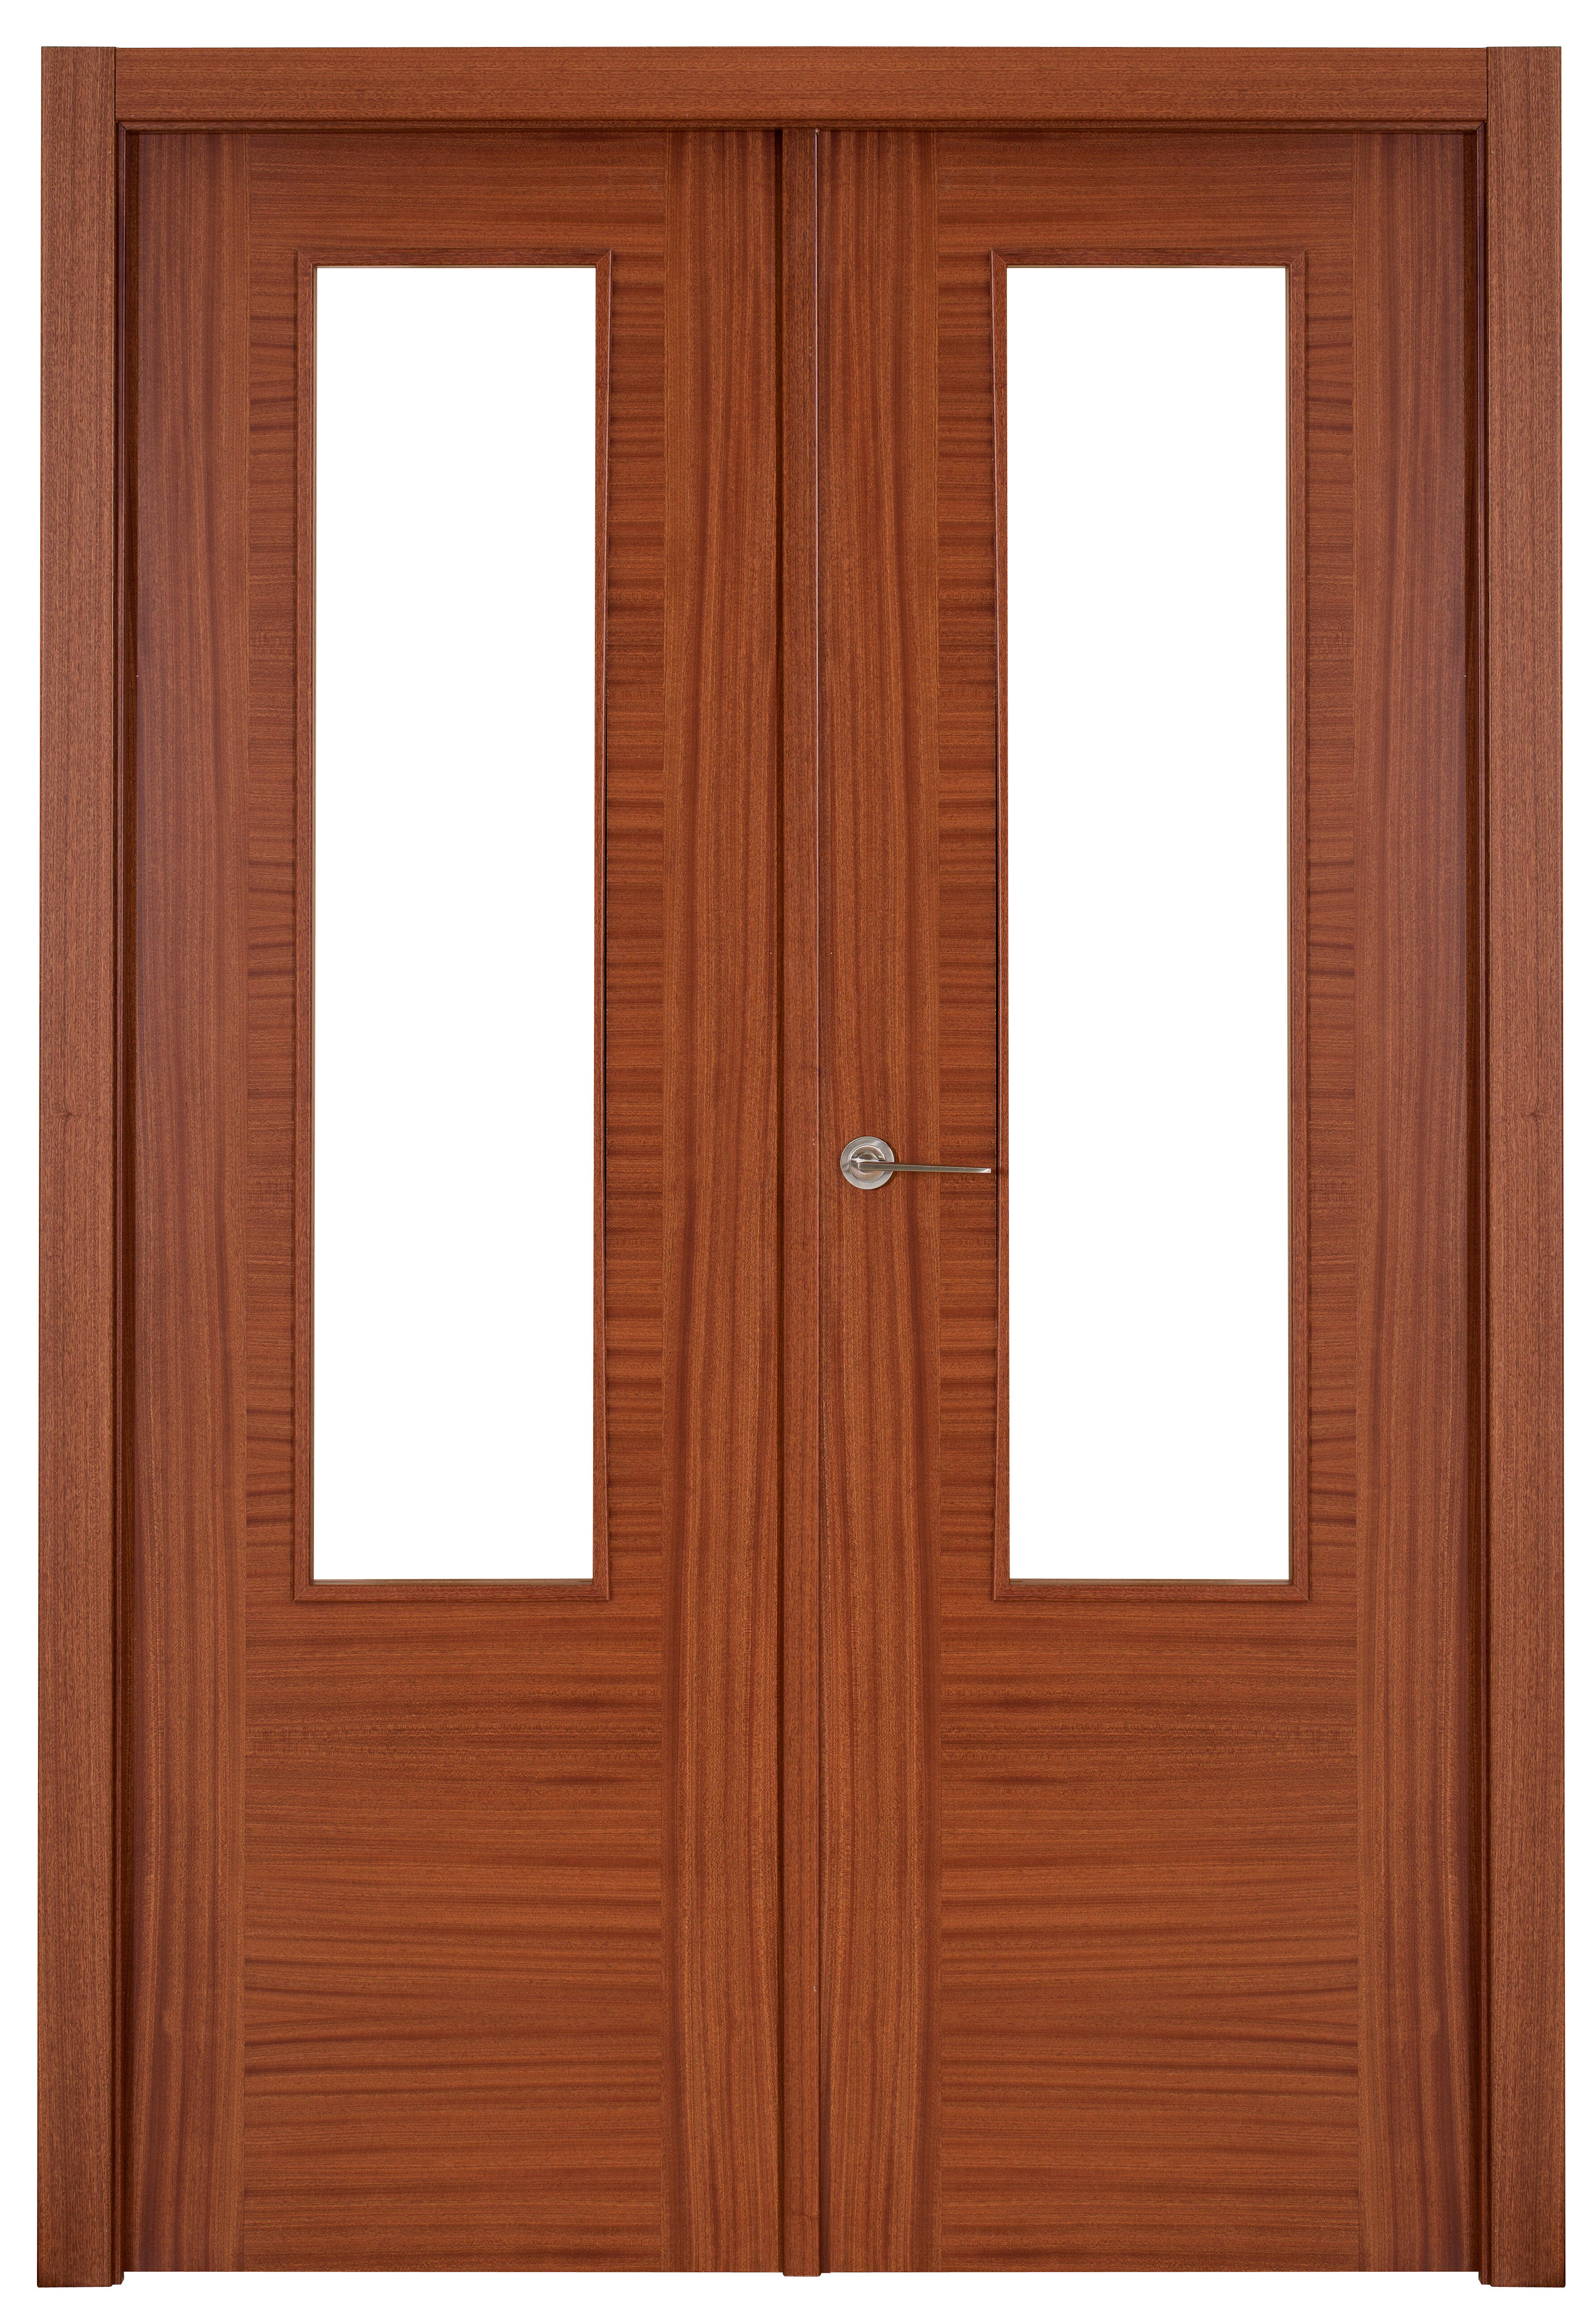 Puerta abatible niza sapelly line plus con cristal sapelly derecha de 145 cm